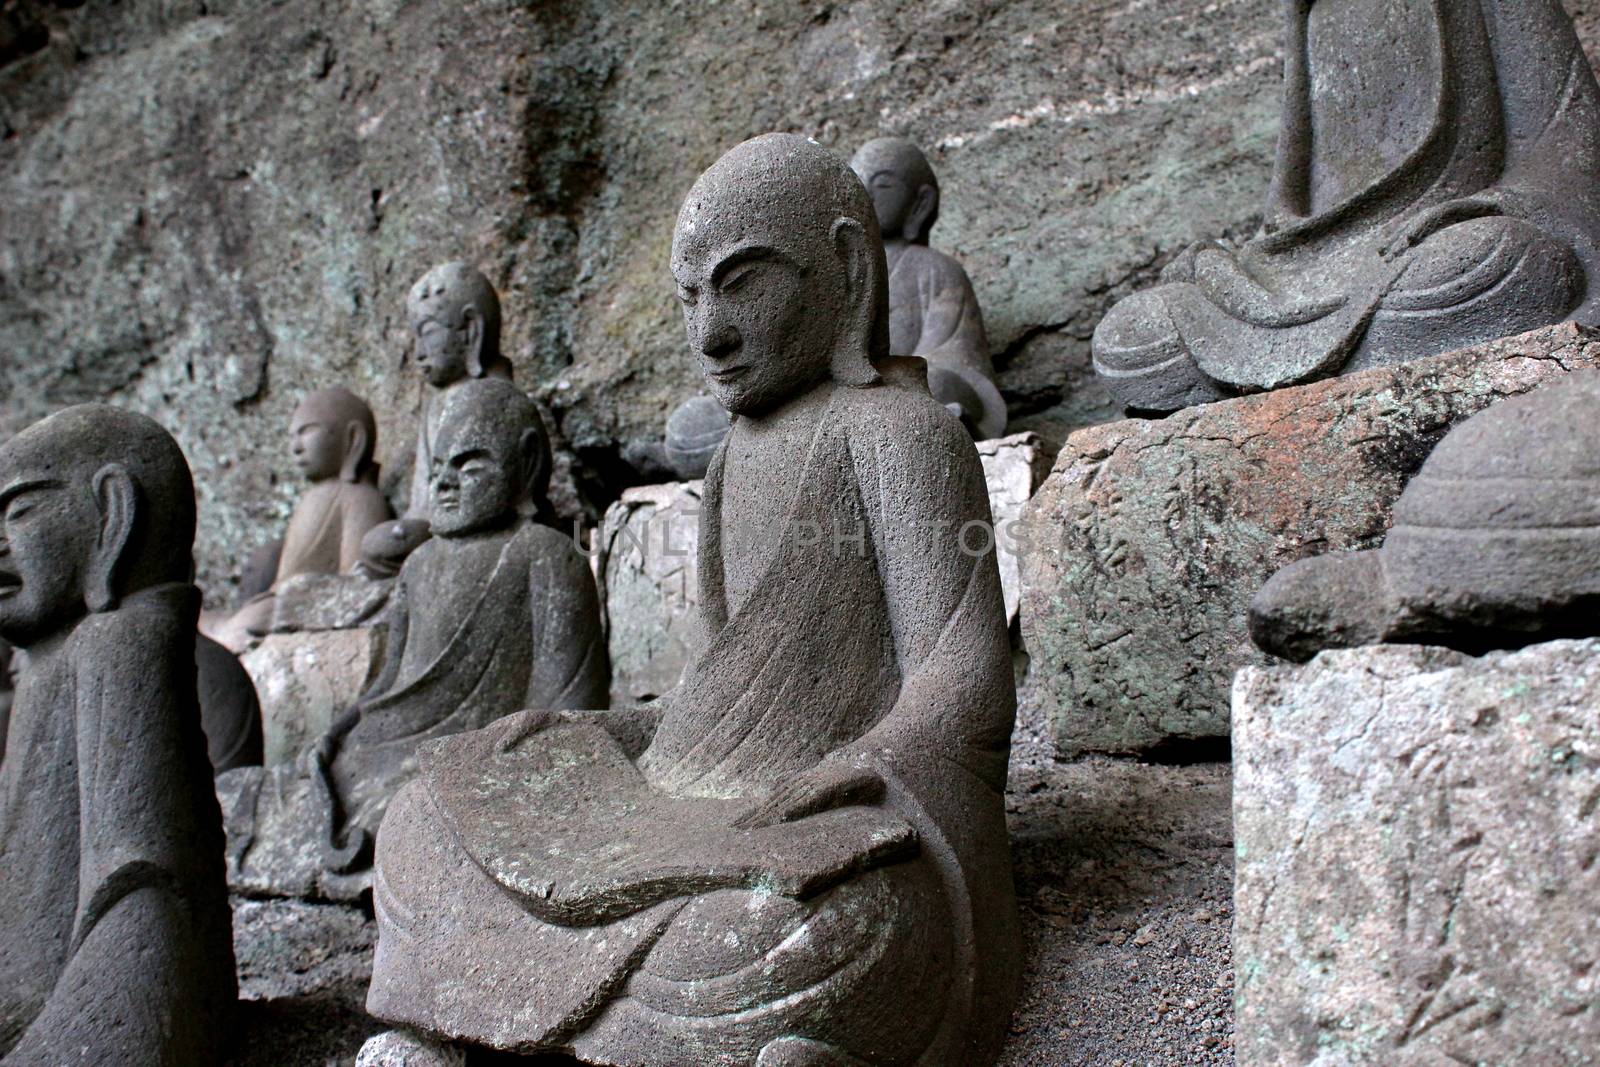 Bodhisattva statues on the side of Mt. Nokogiri in Chiba Prefecture